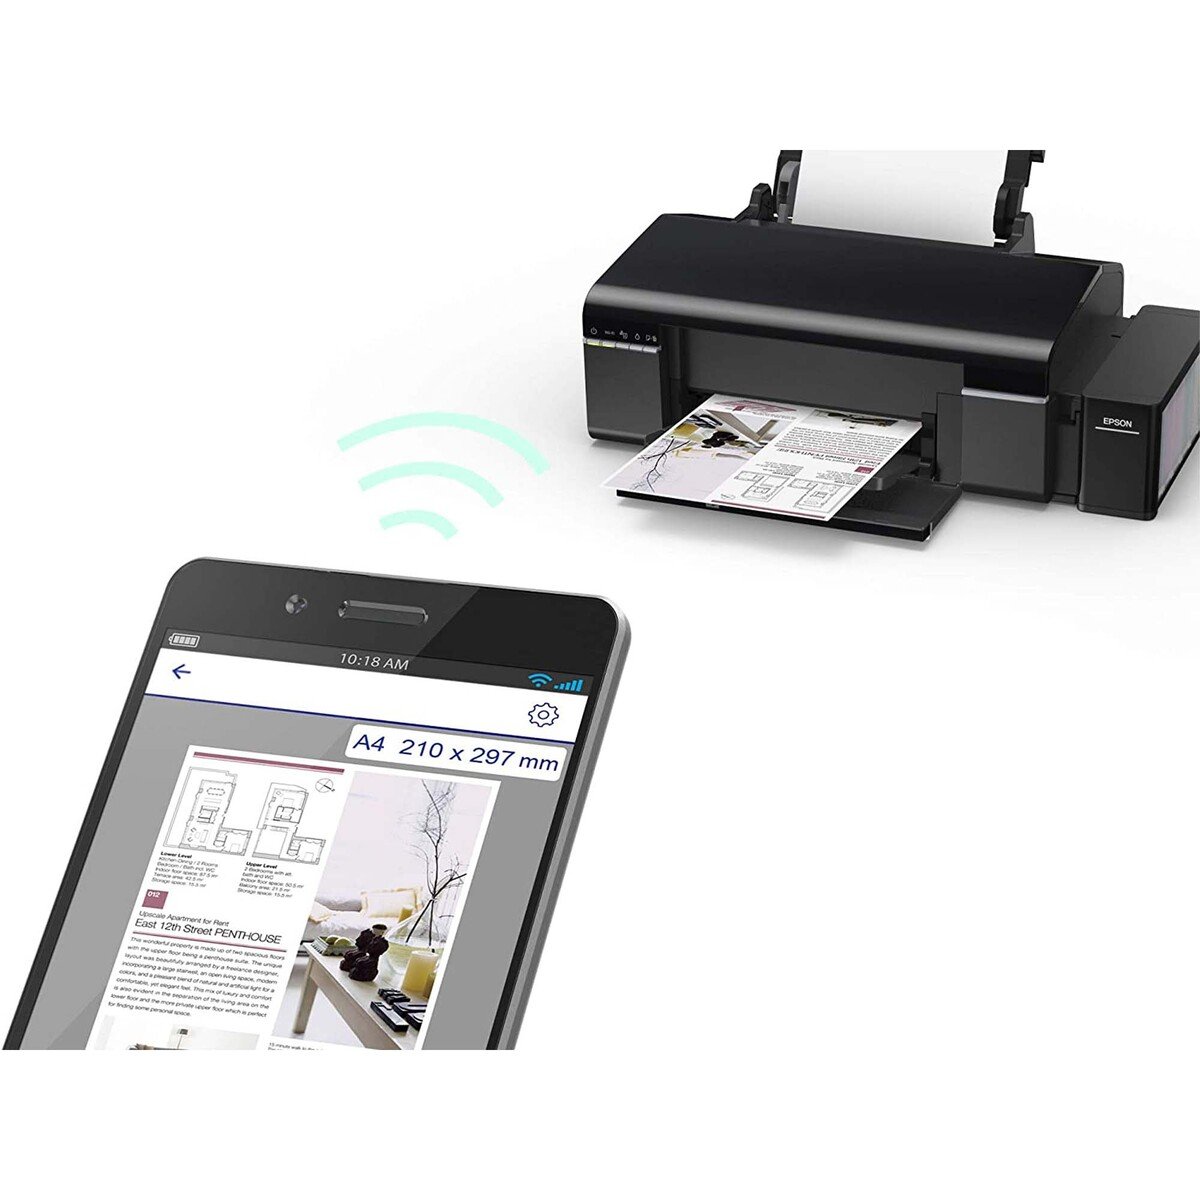 Epson L805 A4 Wireless Photo Printer with Wi-Fi - Black